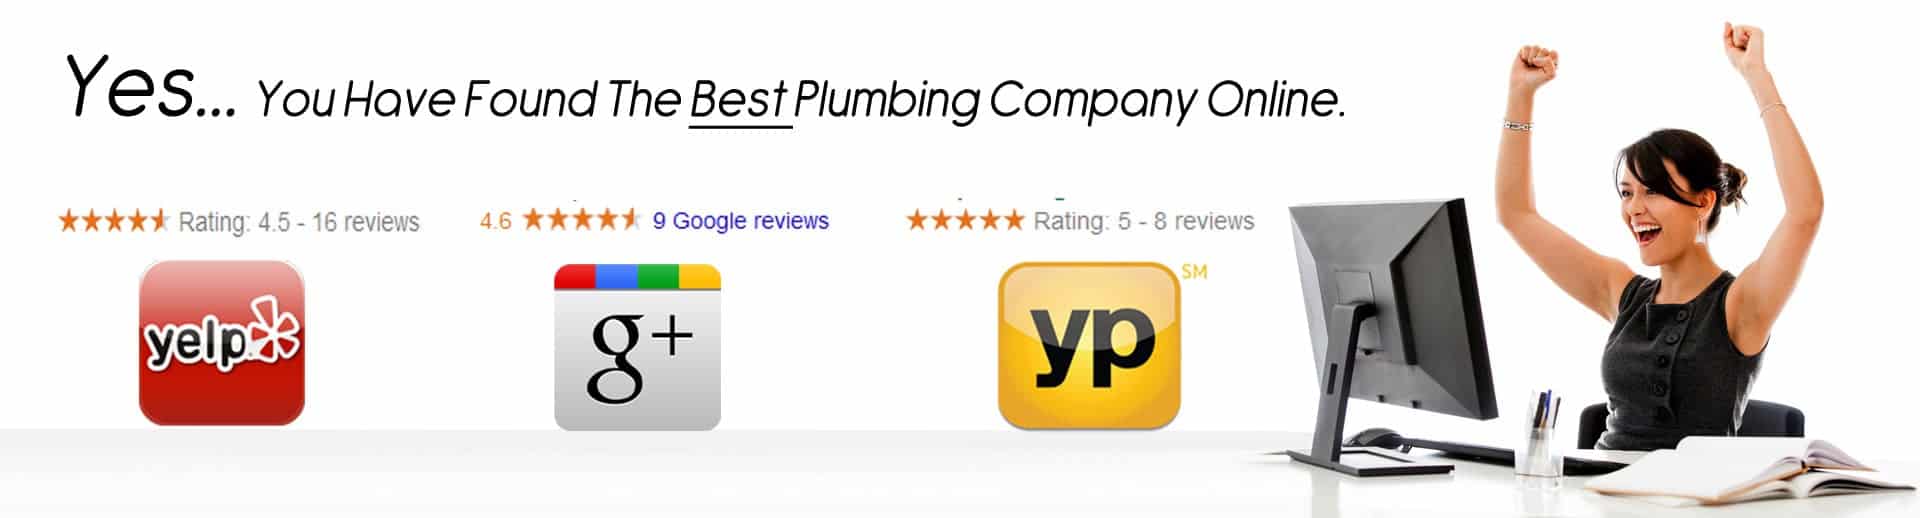 plumbing company reviews